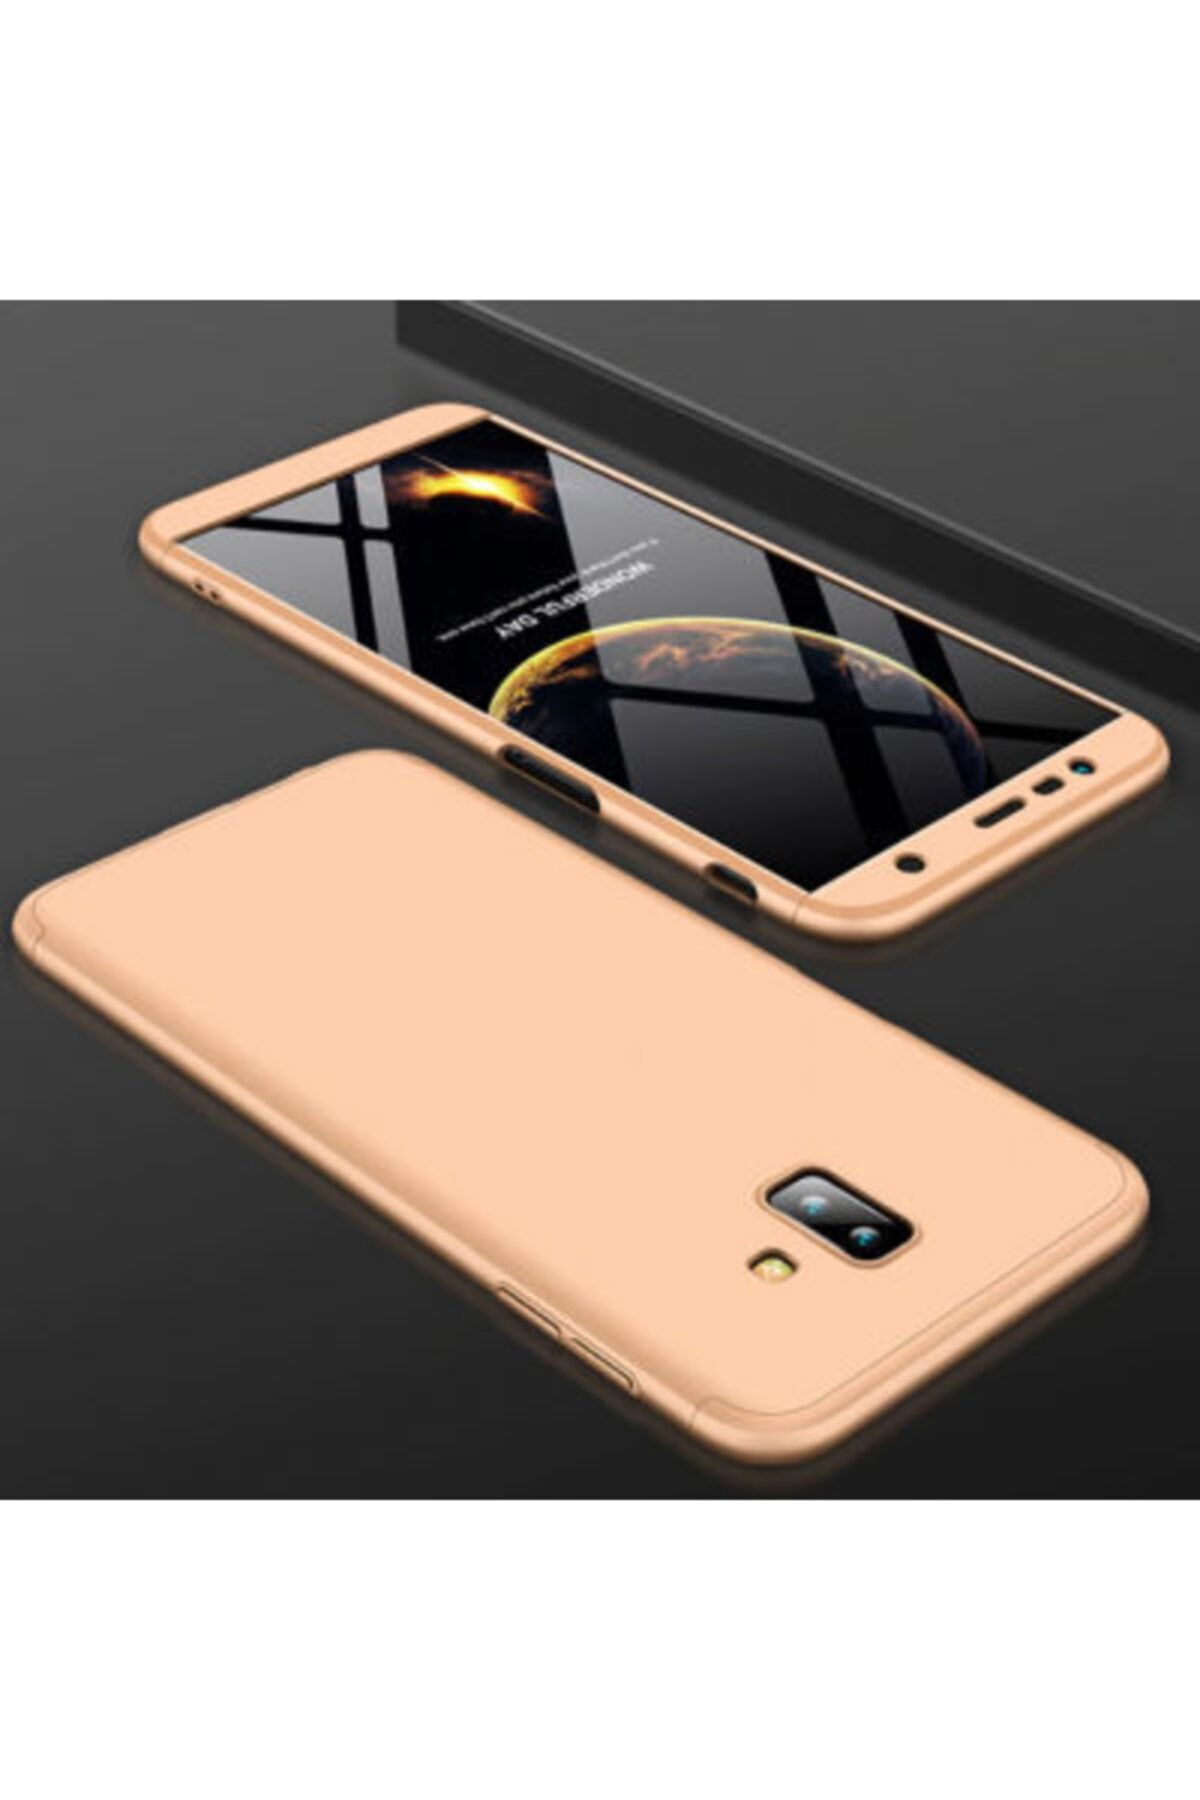 Fibaks Samsung Galaxy J6 Plus Kılıf 360 Tam Koruma Ön Ve Arka Sert Mika Kapak Orjinal Ays Gkk Kapak